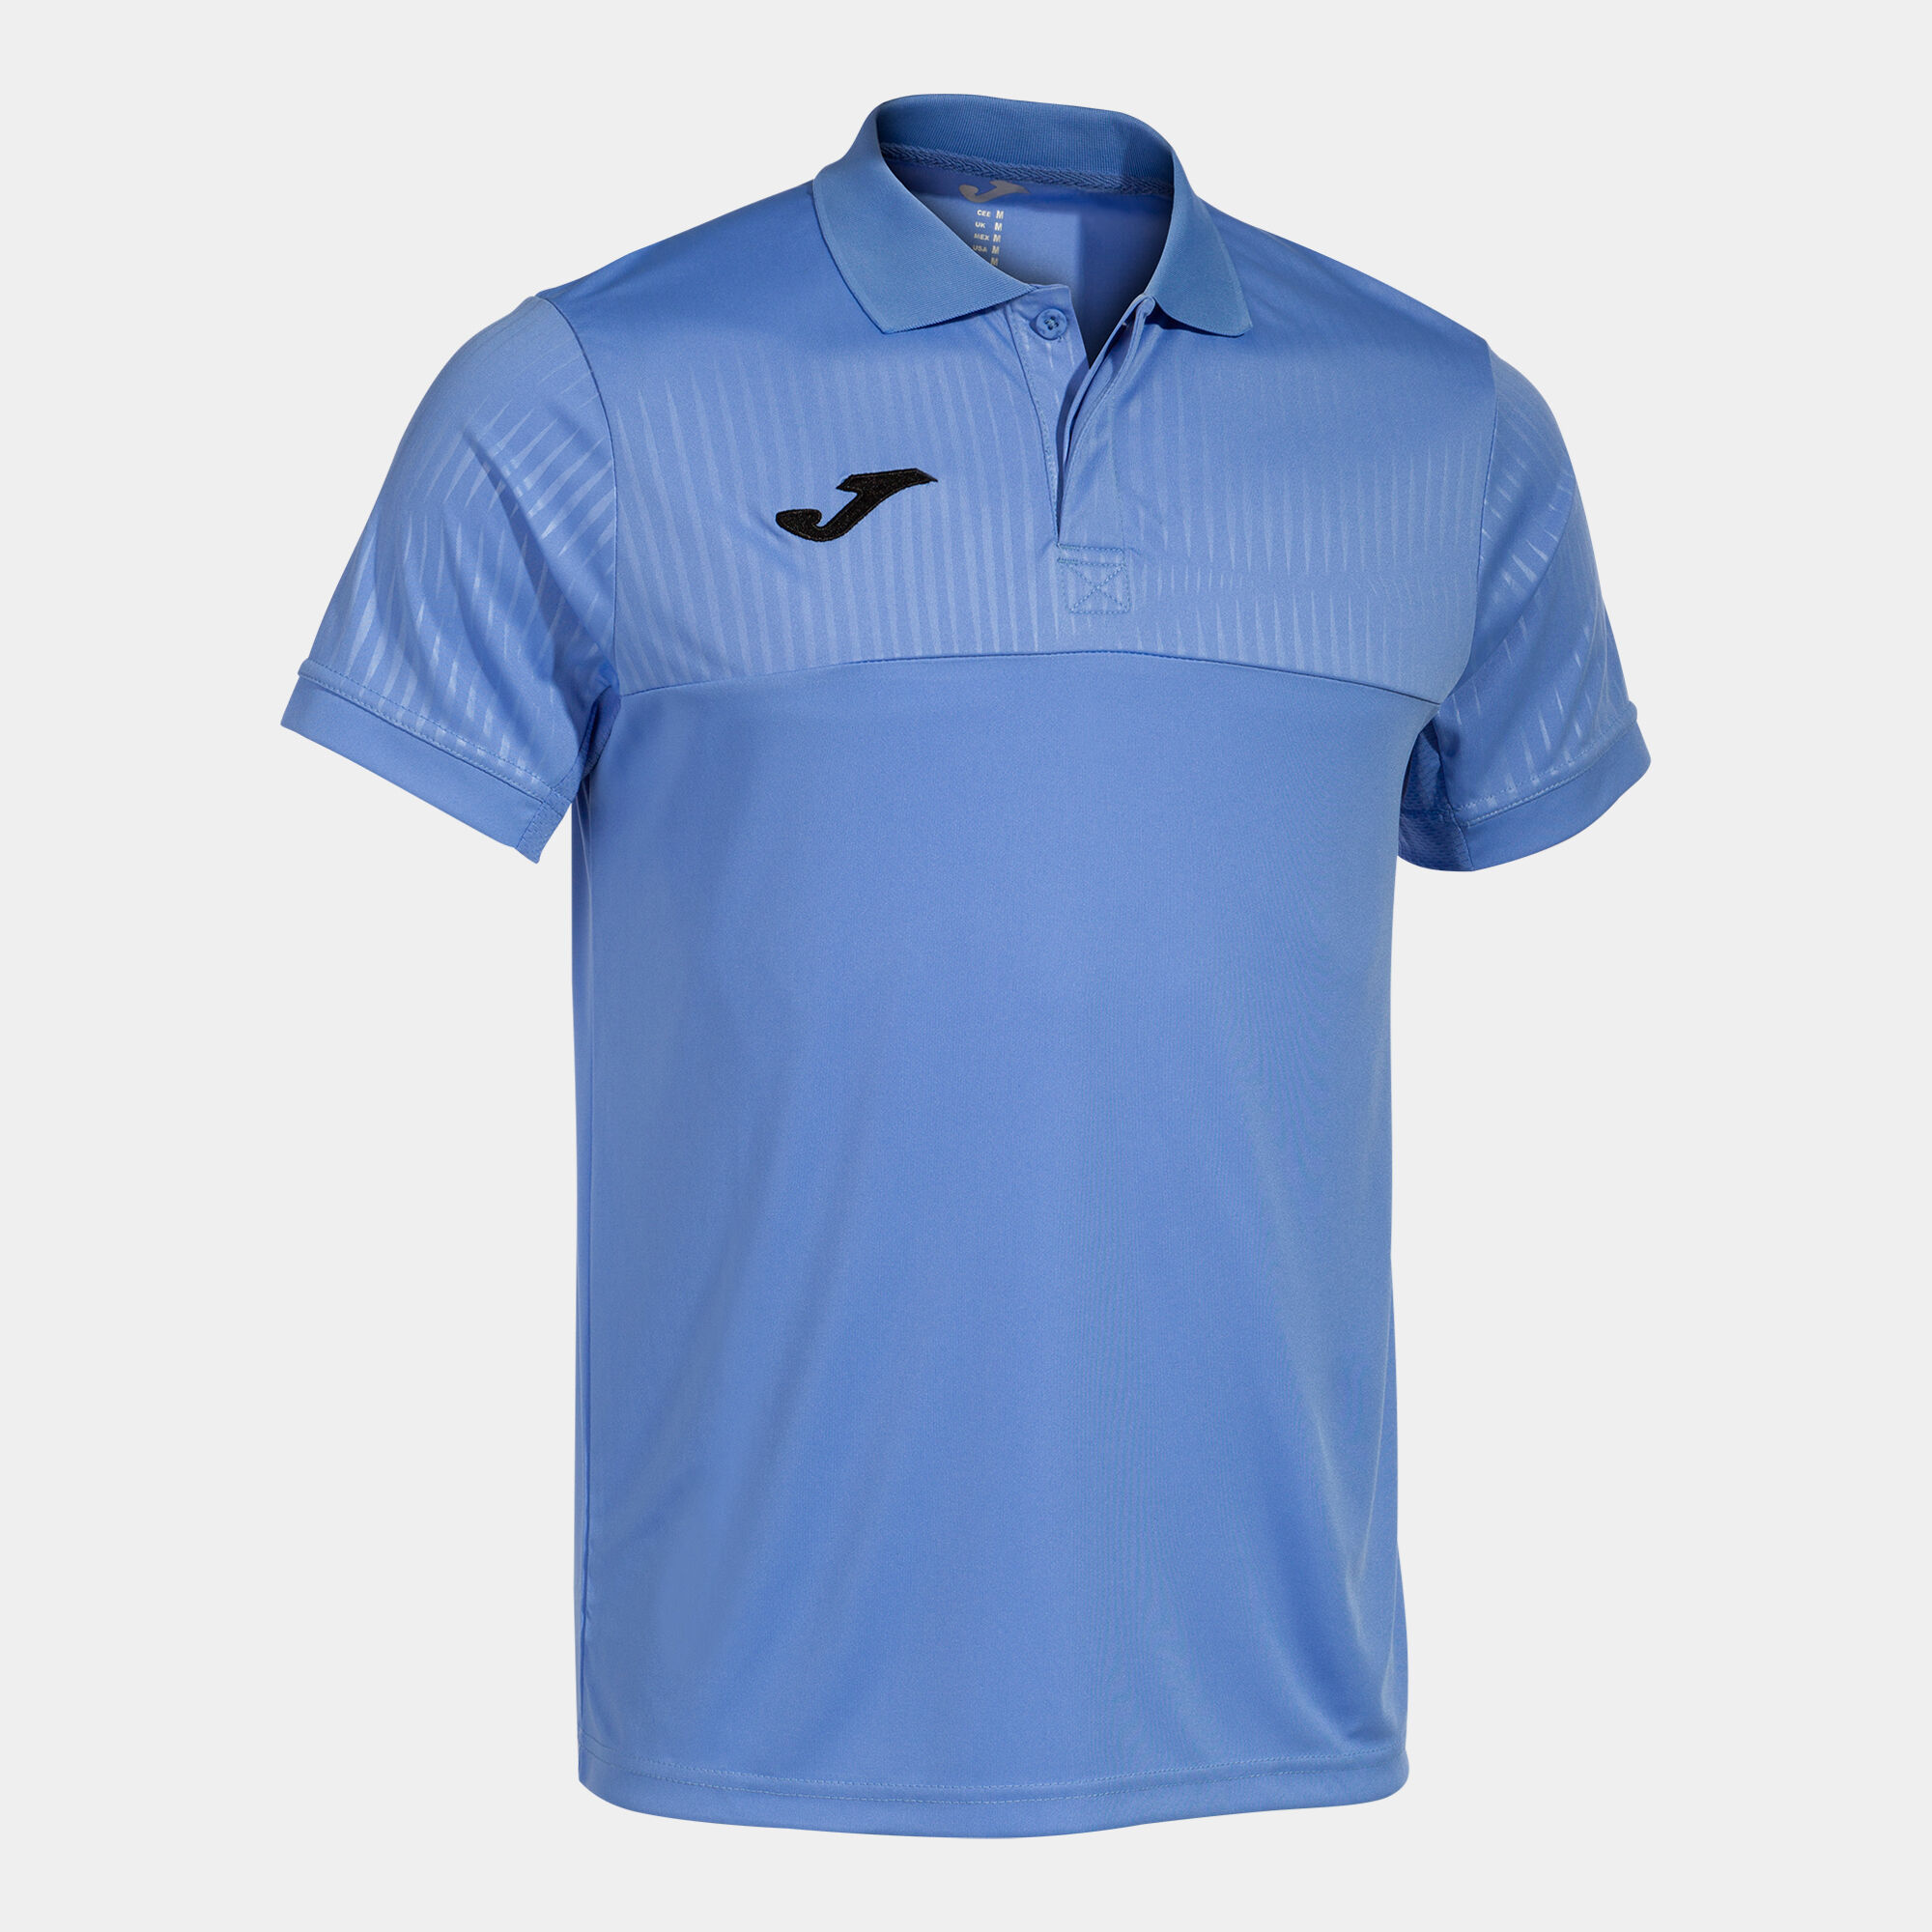 Polo shirt short-sleeve man Montreal blue